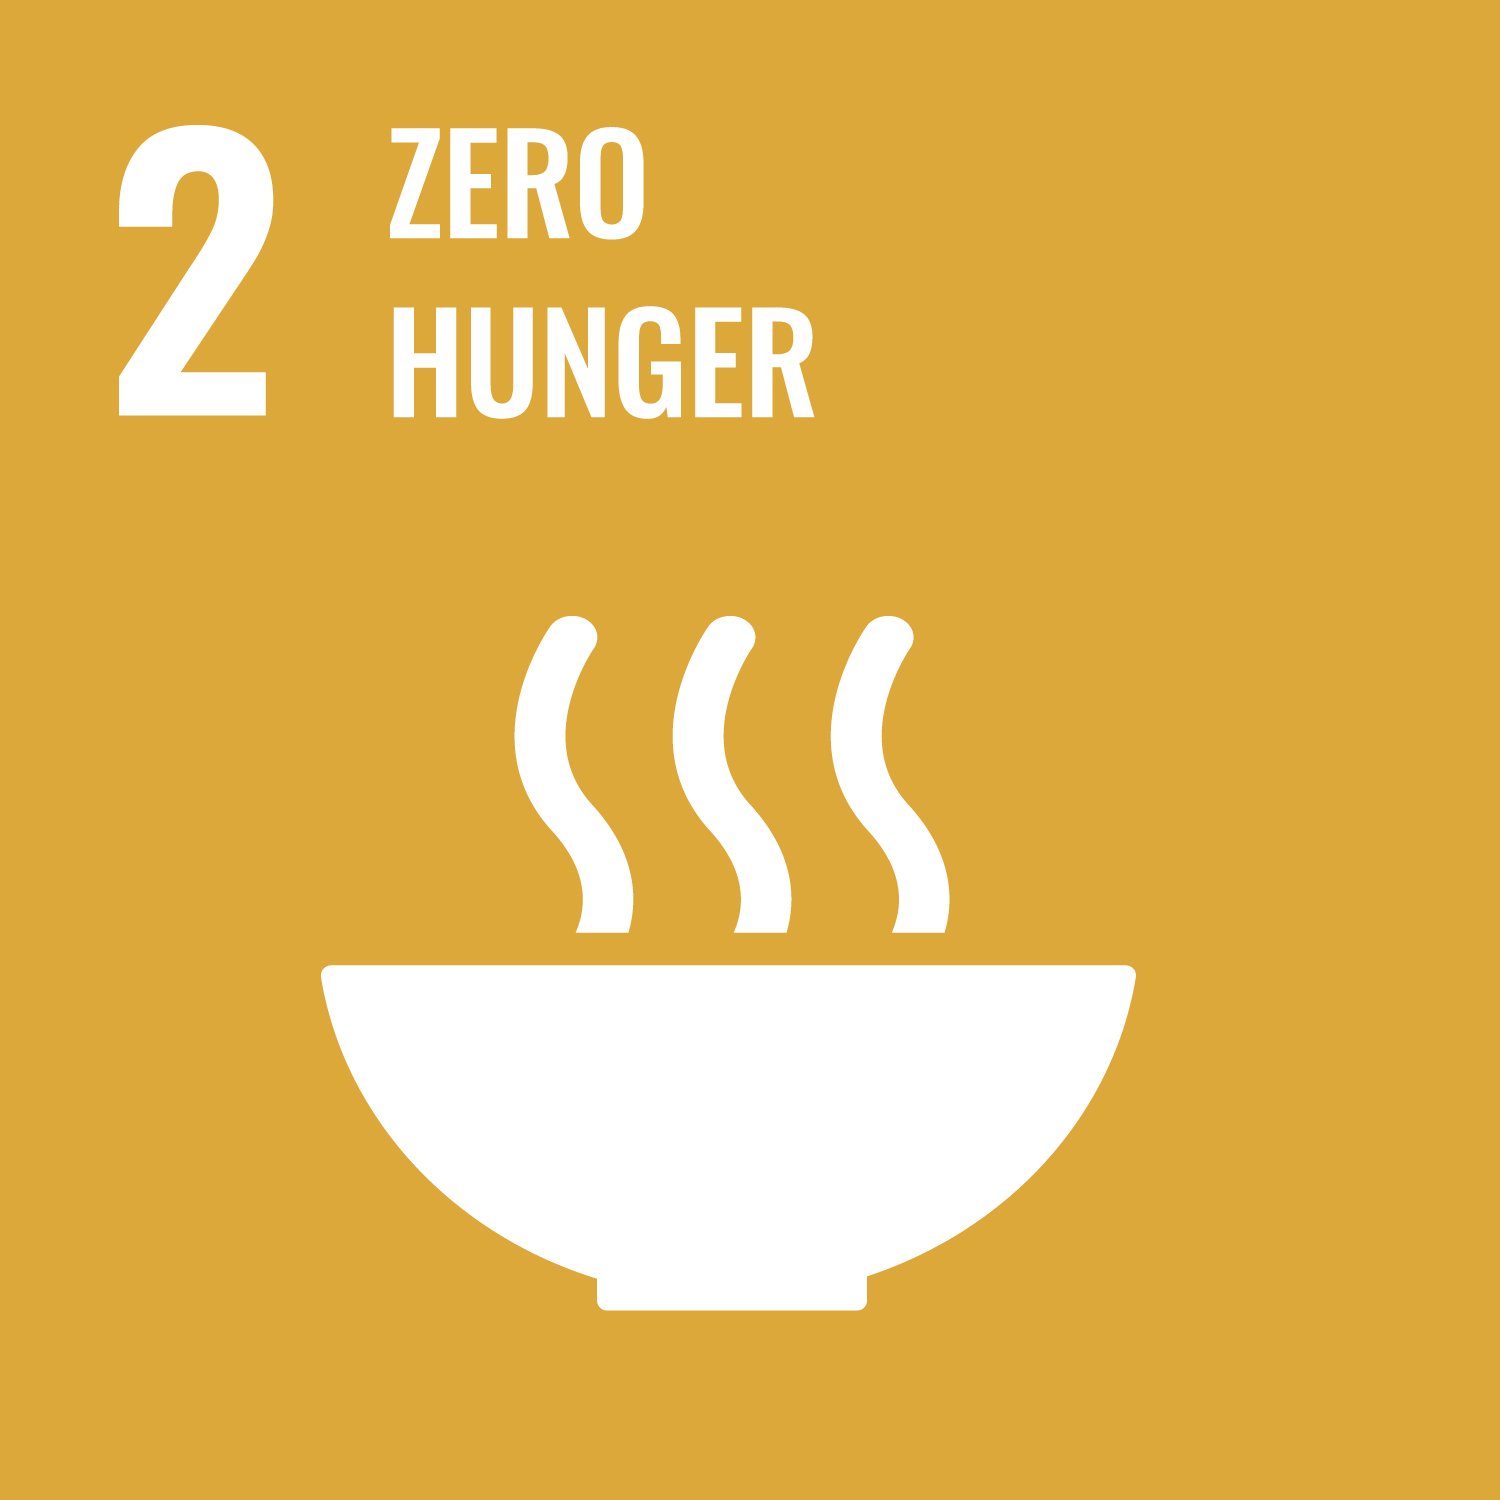 United Nations Sustainable Development Goal 02 - Zero Hunger